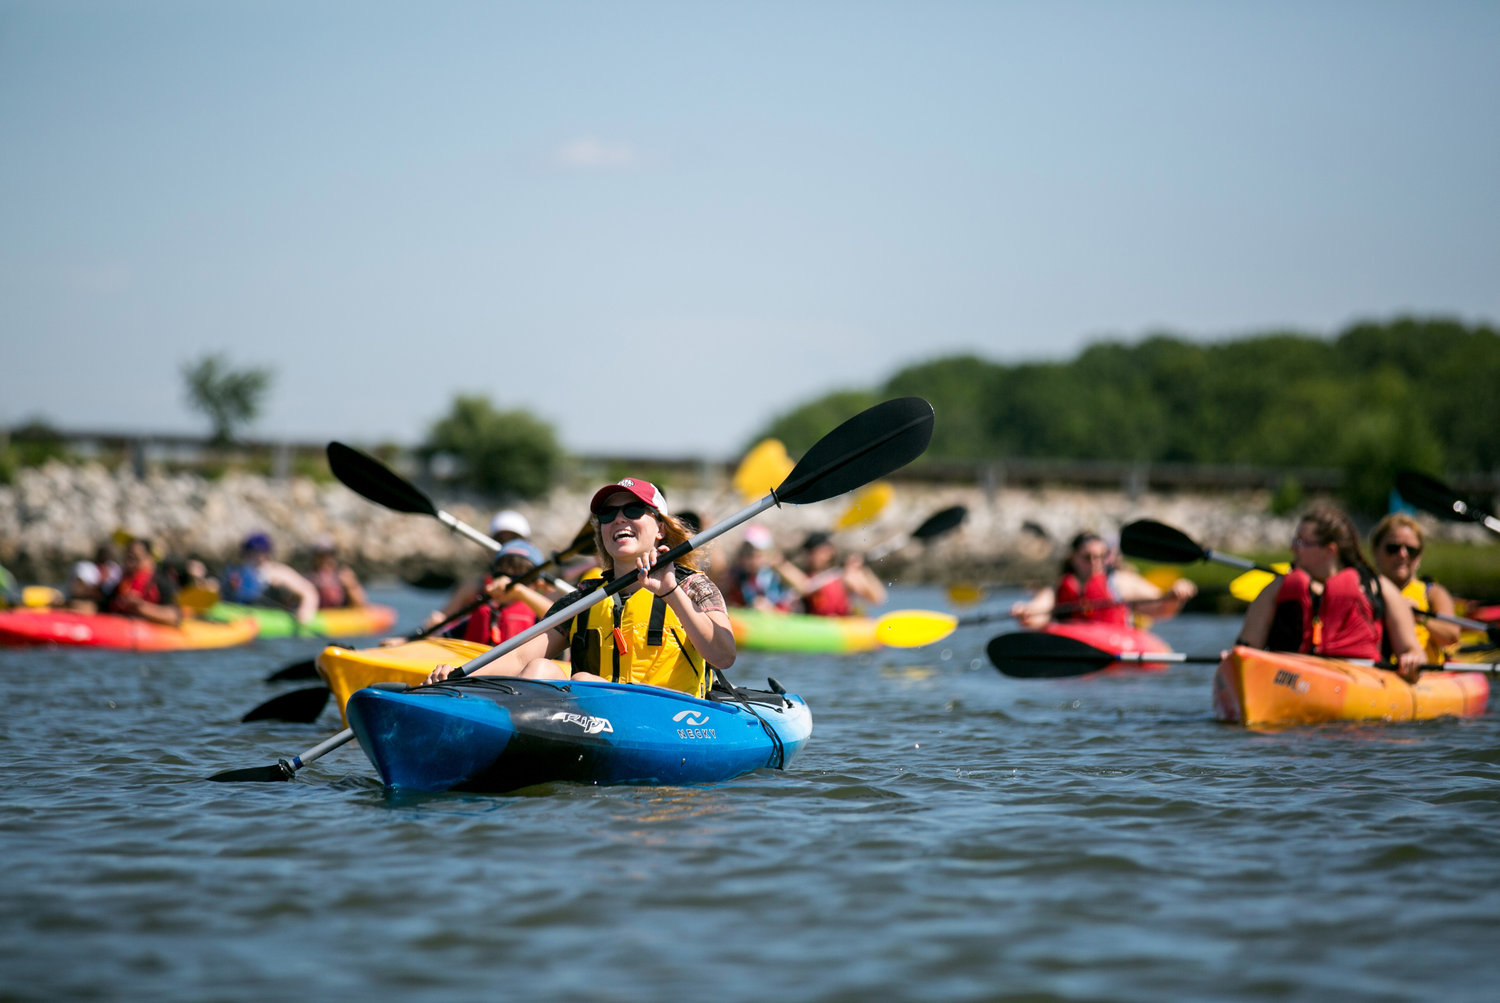 Rentals from Narrow River Kayaks encourage water adventures